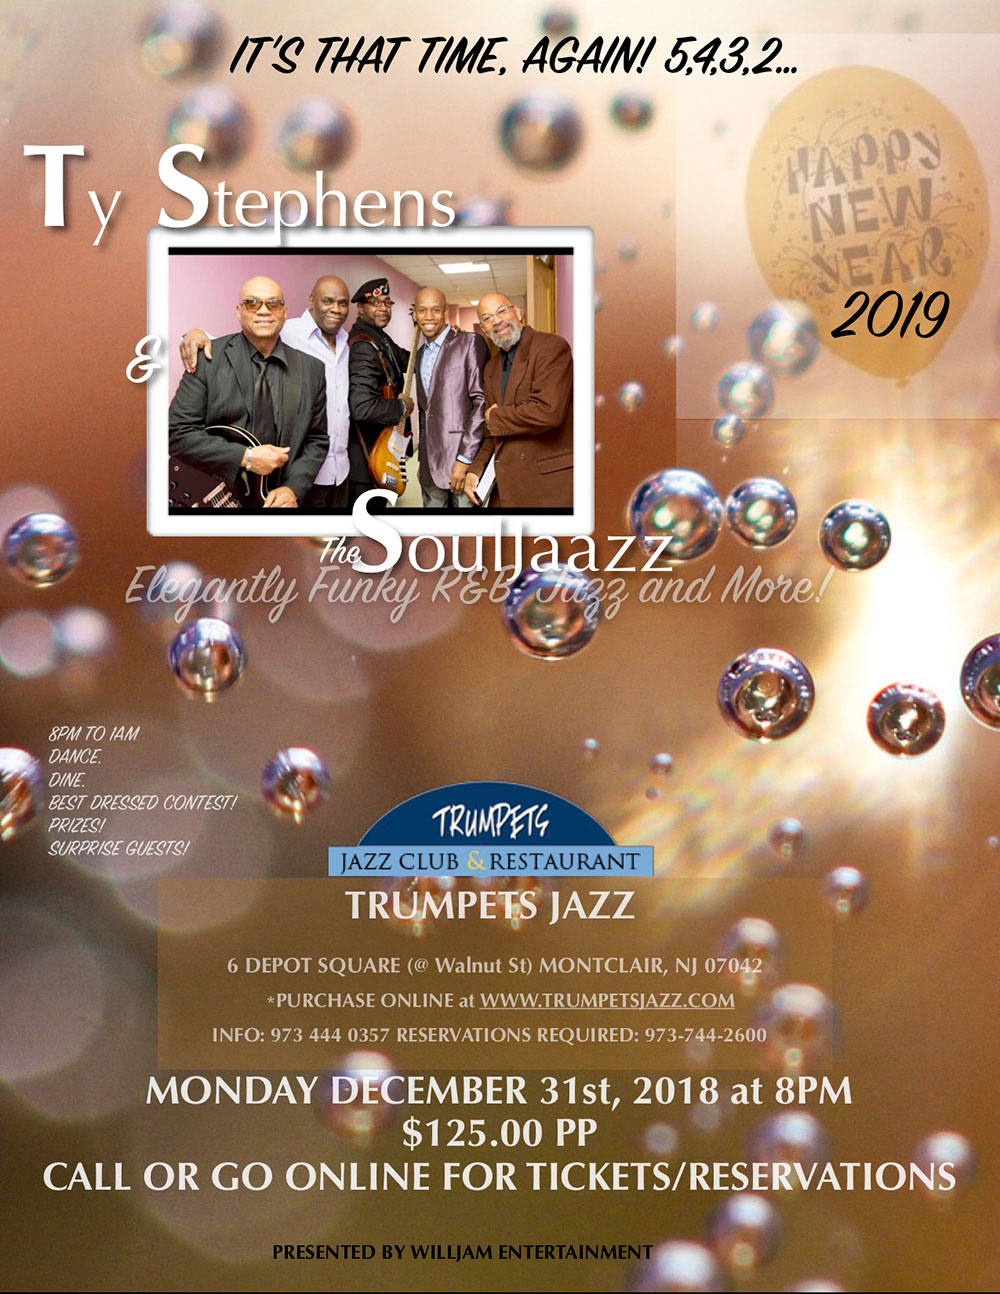 New Year's Gala at Trumpets Jazz Club